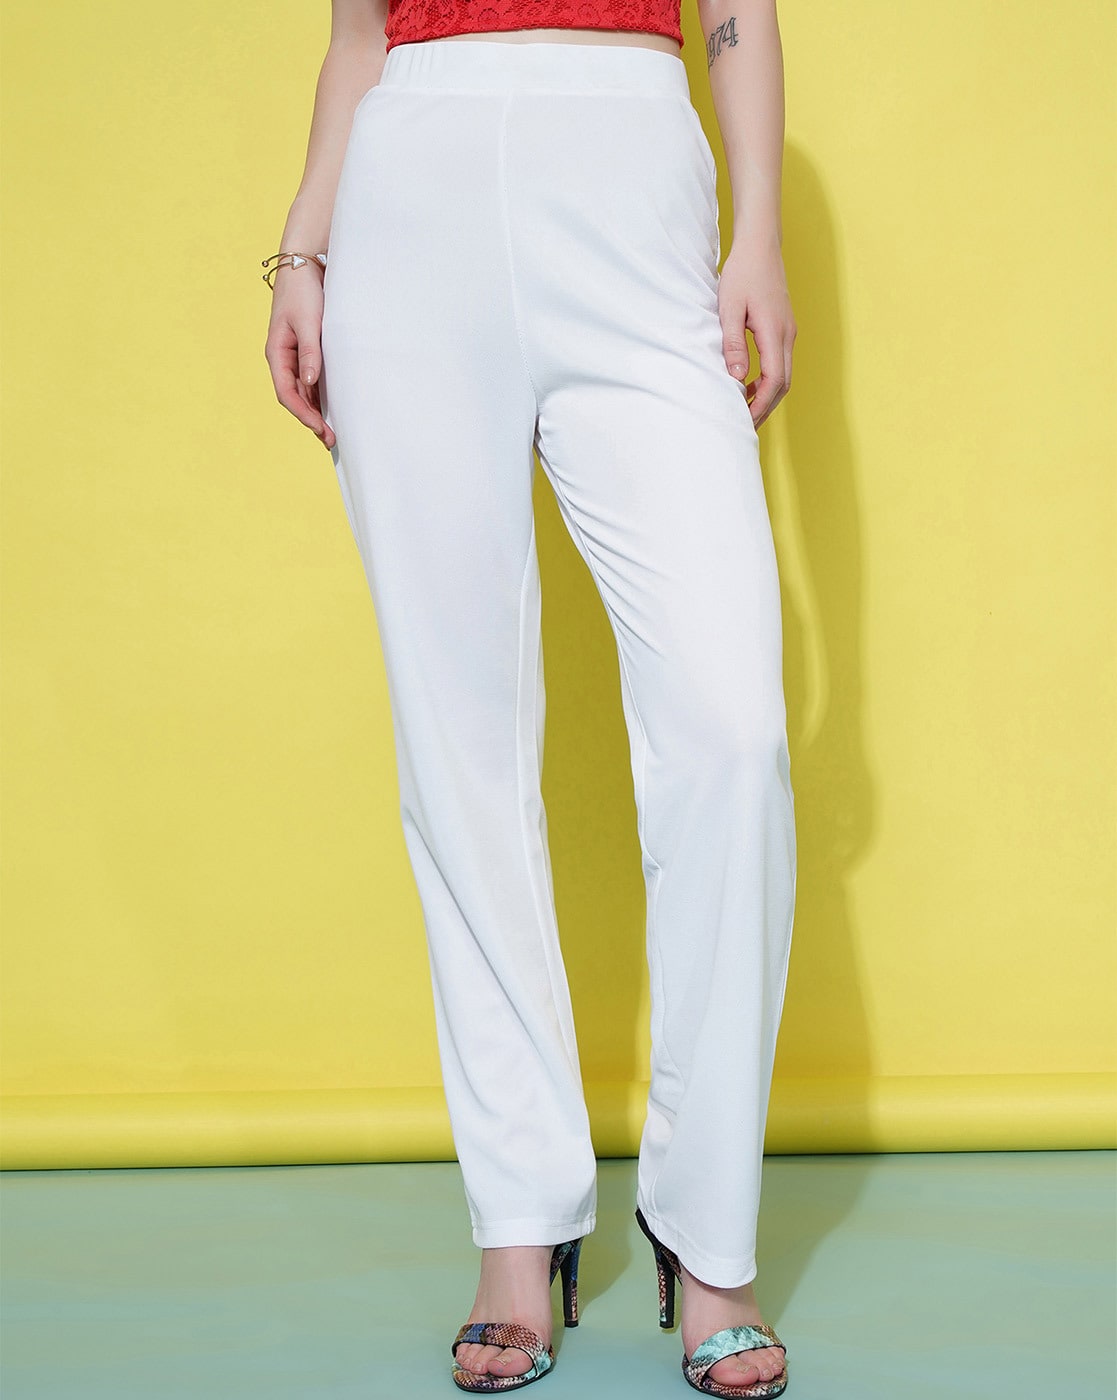 White Pants | Buy Women's White Pants Online Australia - THE ICONIC